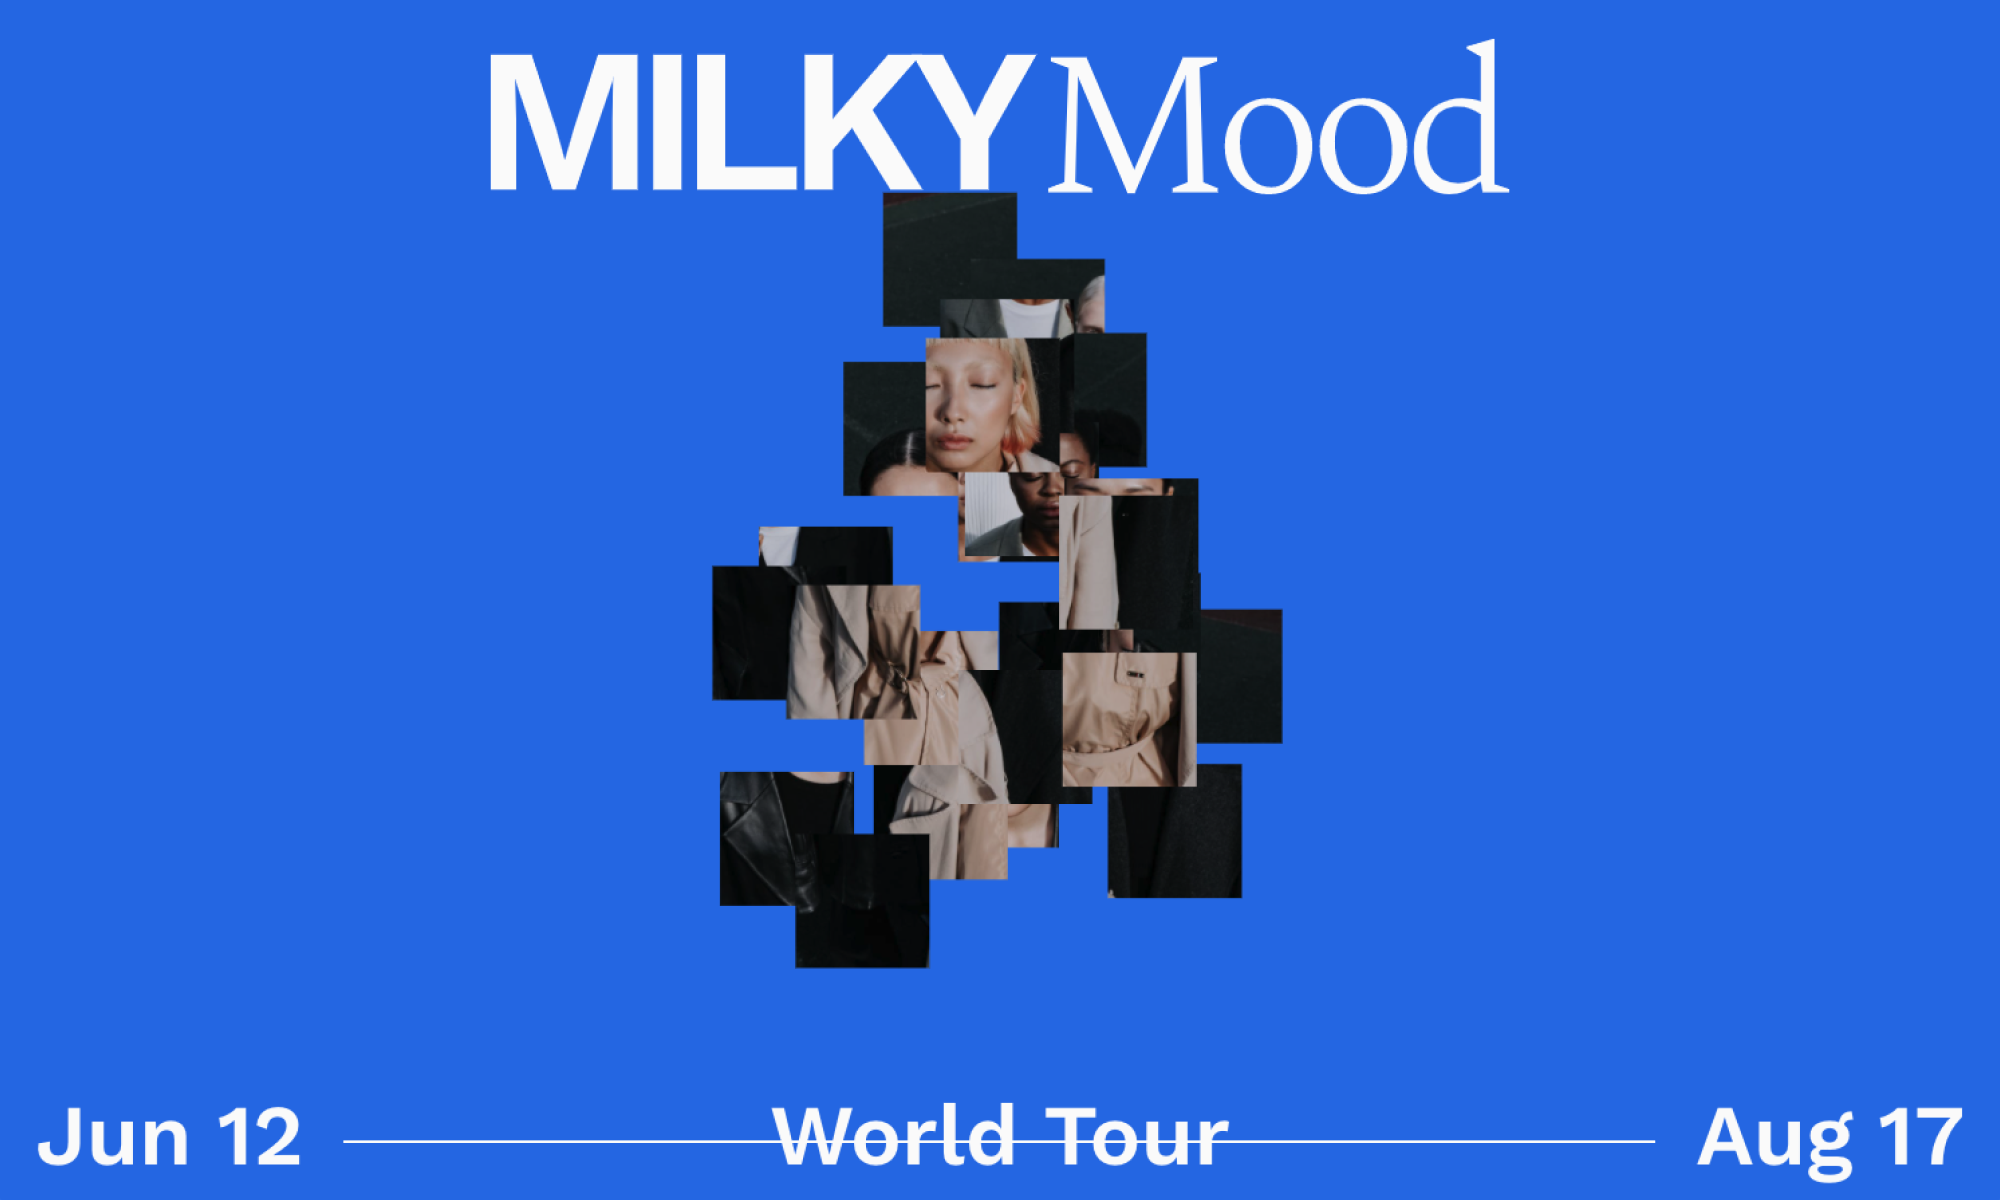 Milky Mood – Part 2